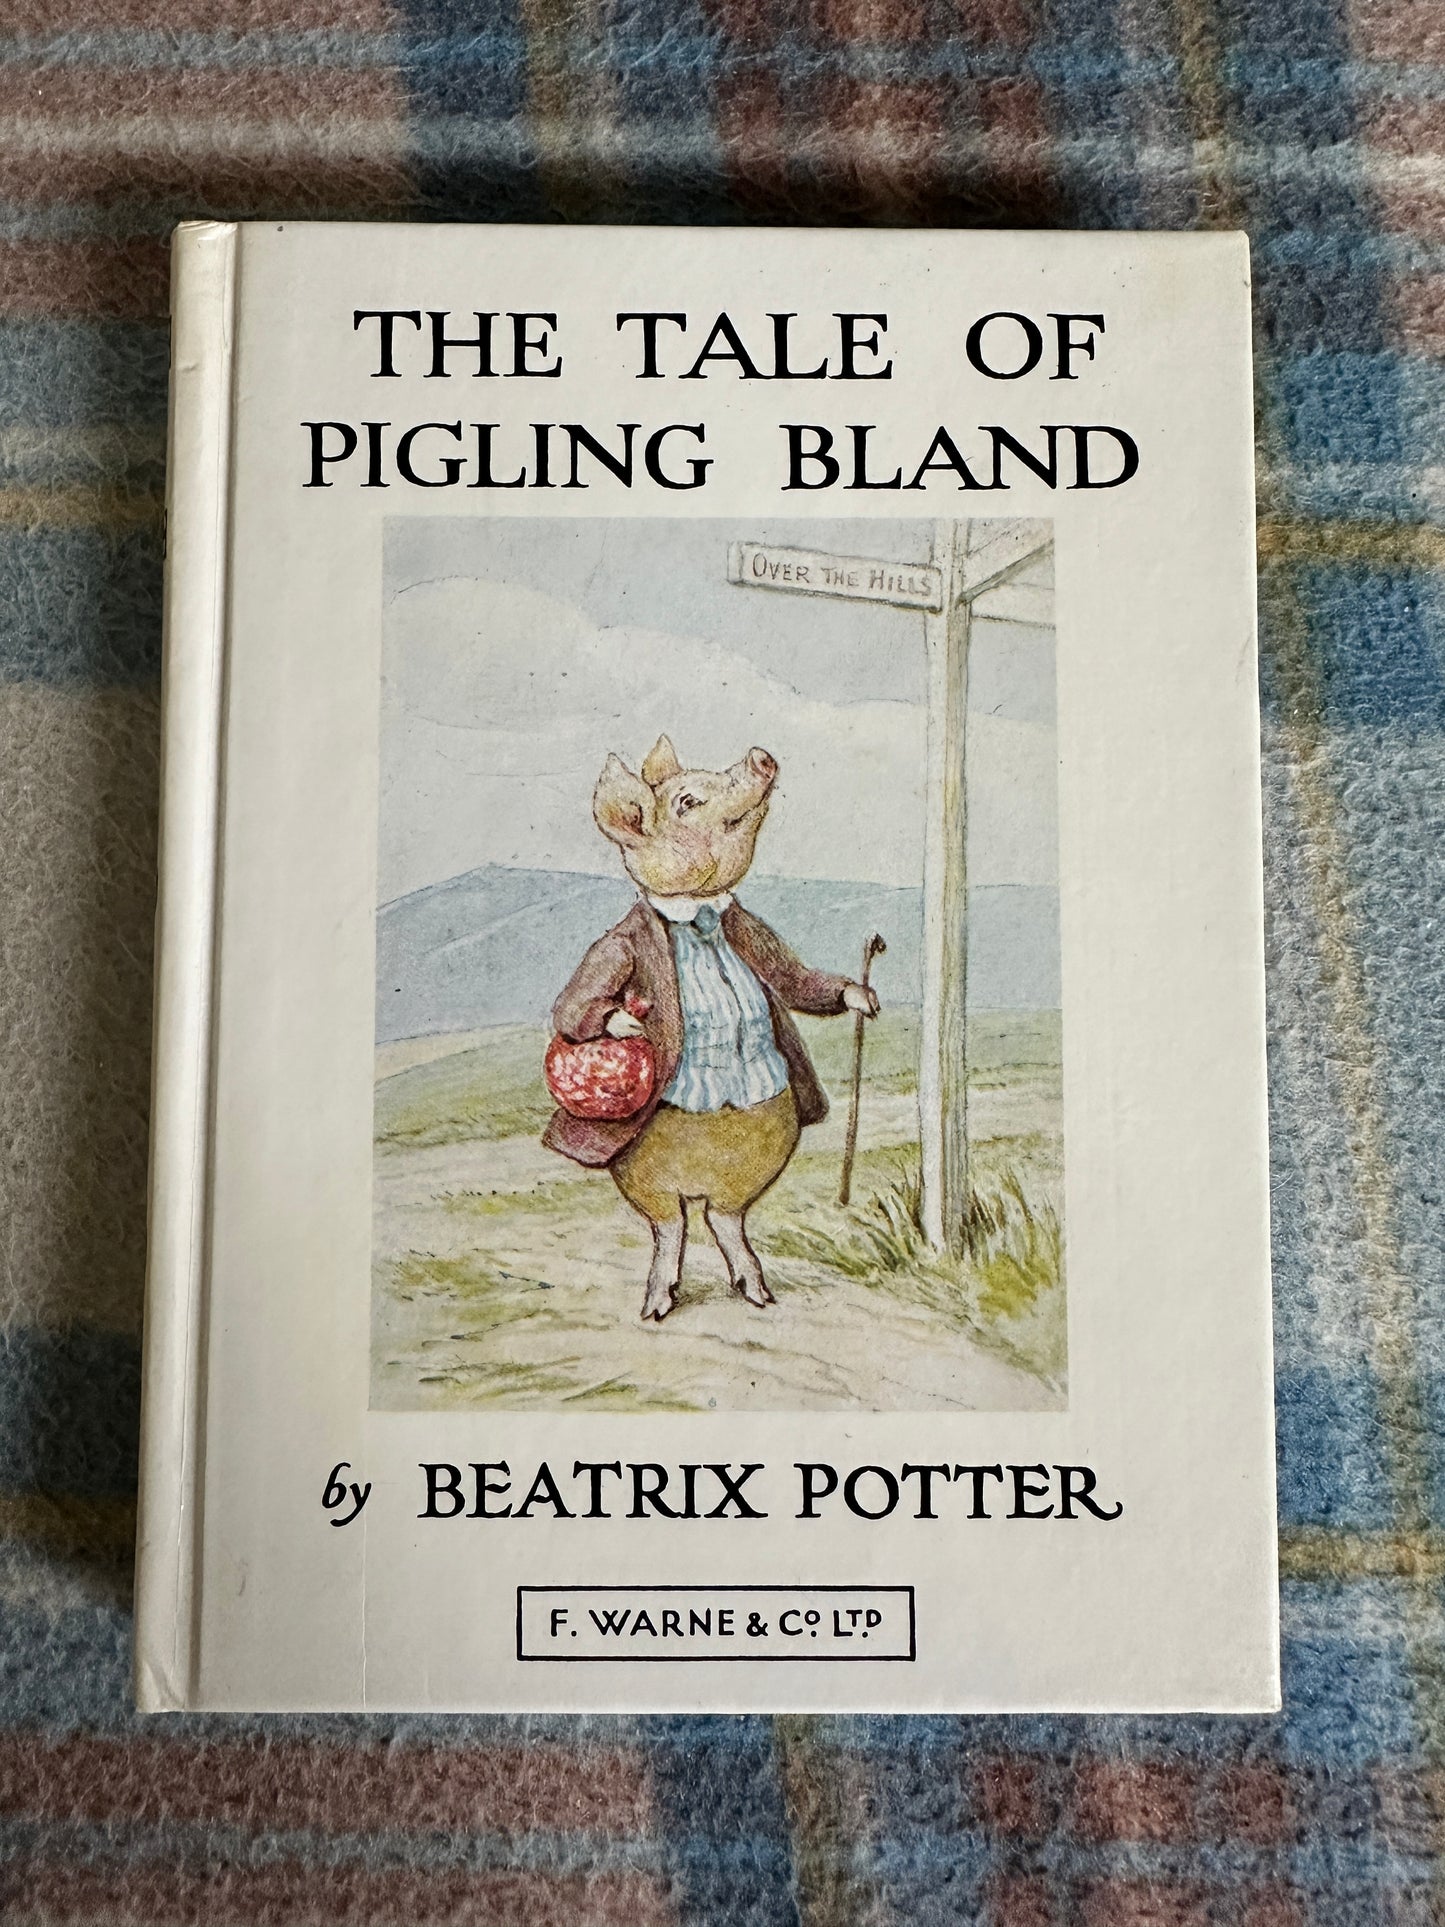 1978 The Tale Of Pigling Bland - Beatrix Potter(Frederick Warne & Vo Ltd)